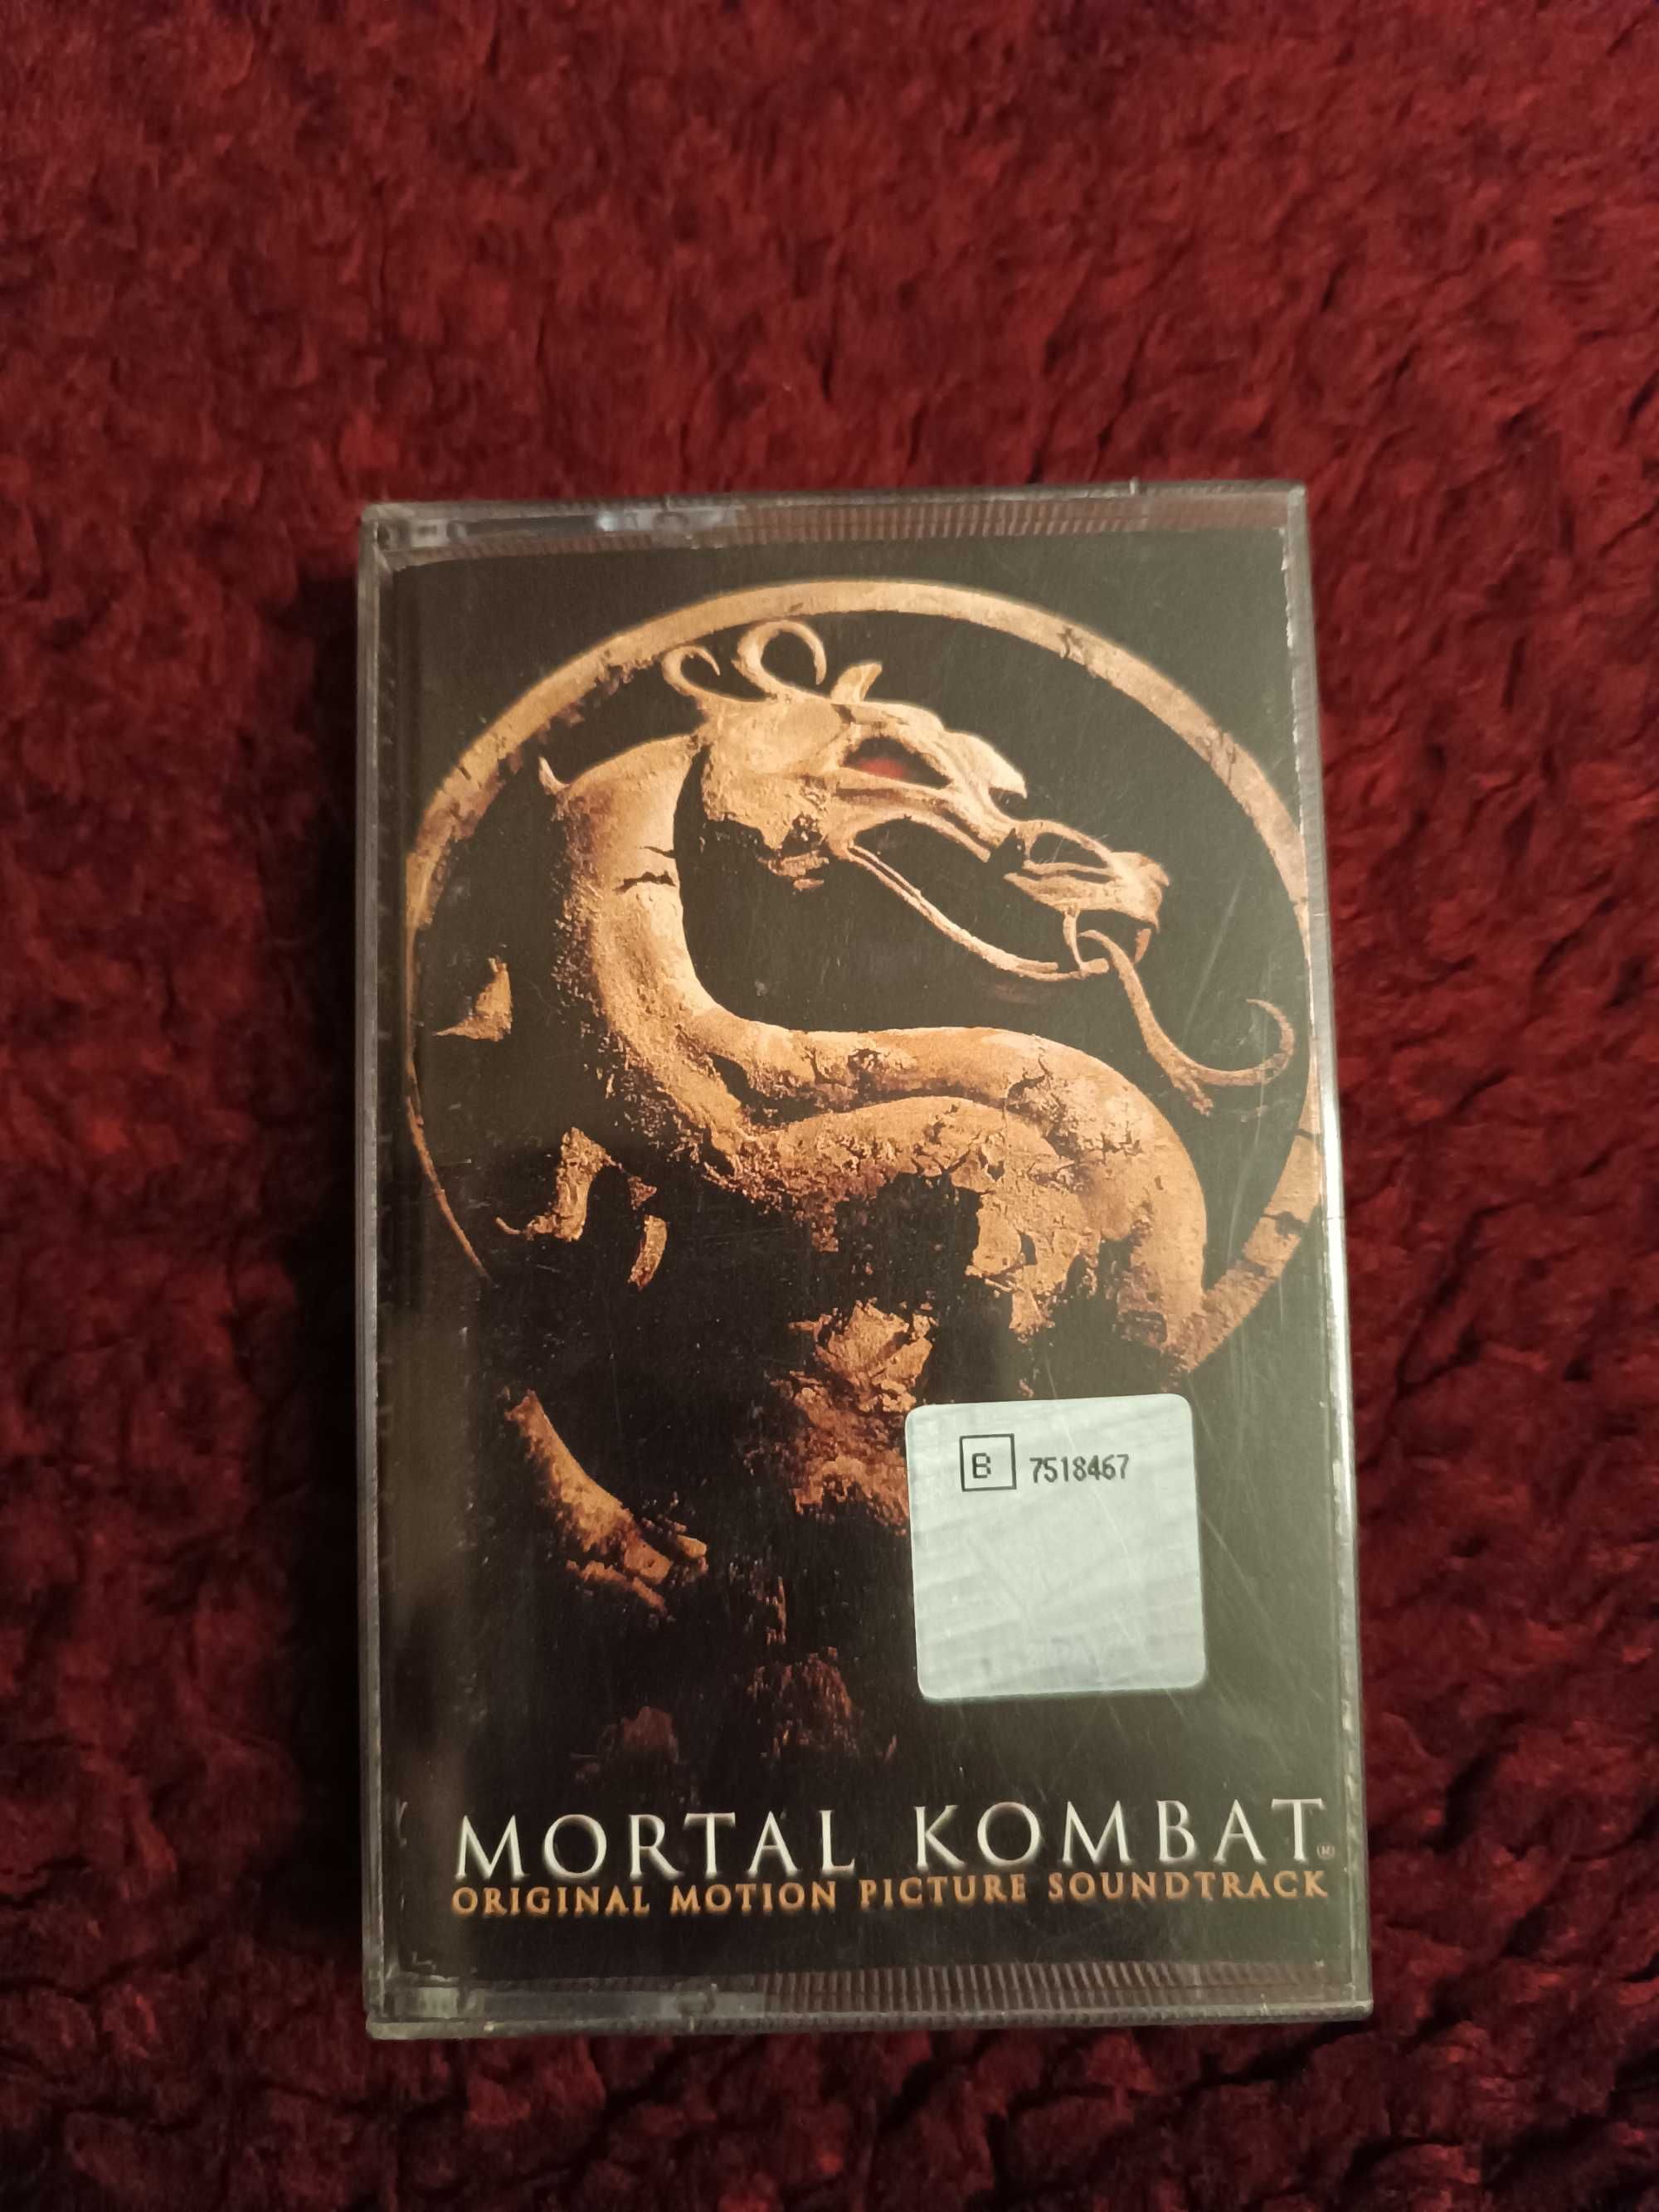 Mortal Kombat - soundtrack